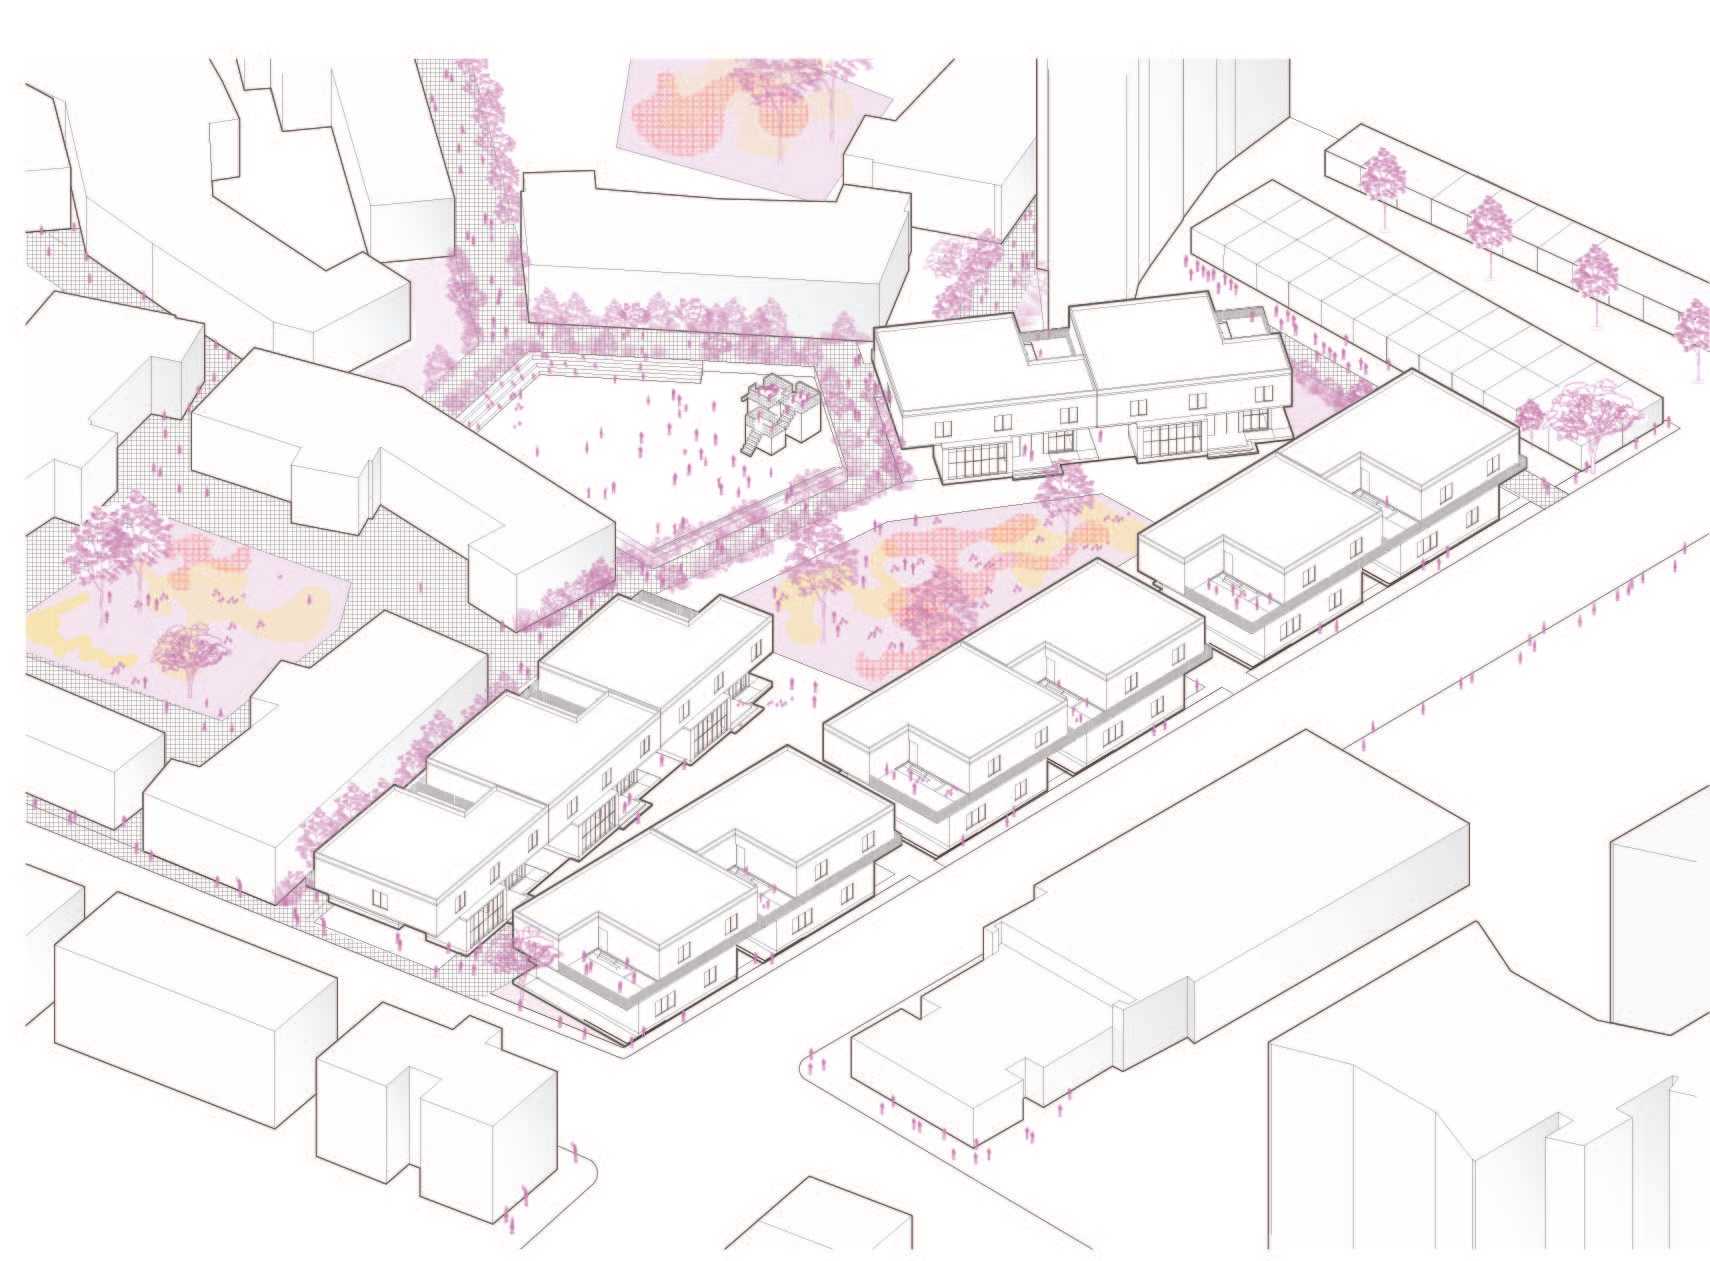 3D representation of residential design concept